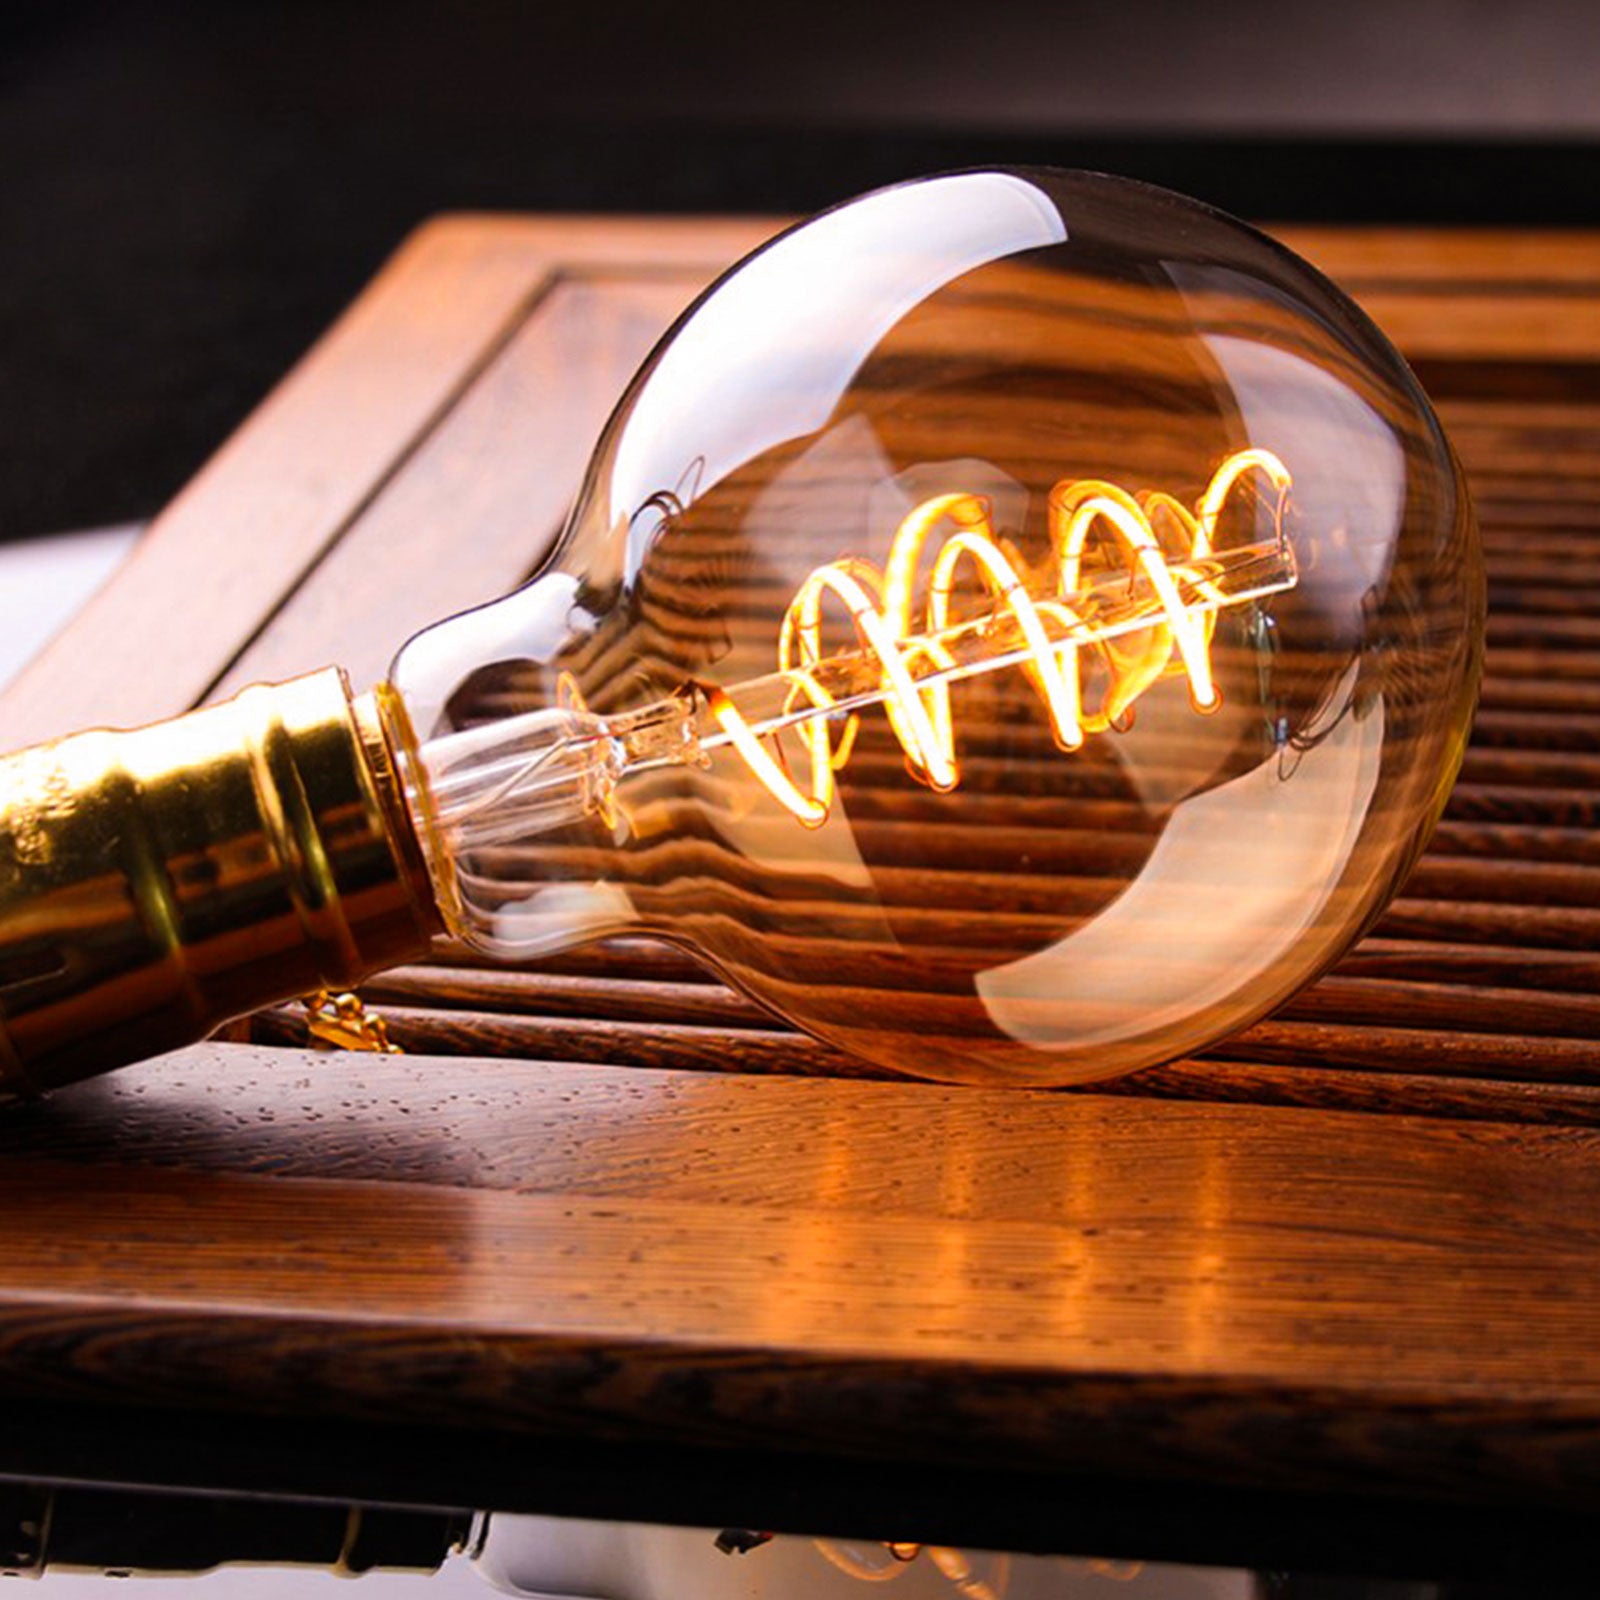 LED Filament Spiral G80 4W=25w Extra Warm White (AMBER) ES E27 Edison Screw Decorative Bulbs